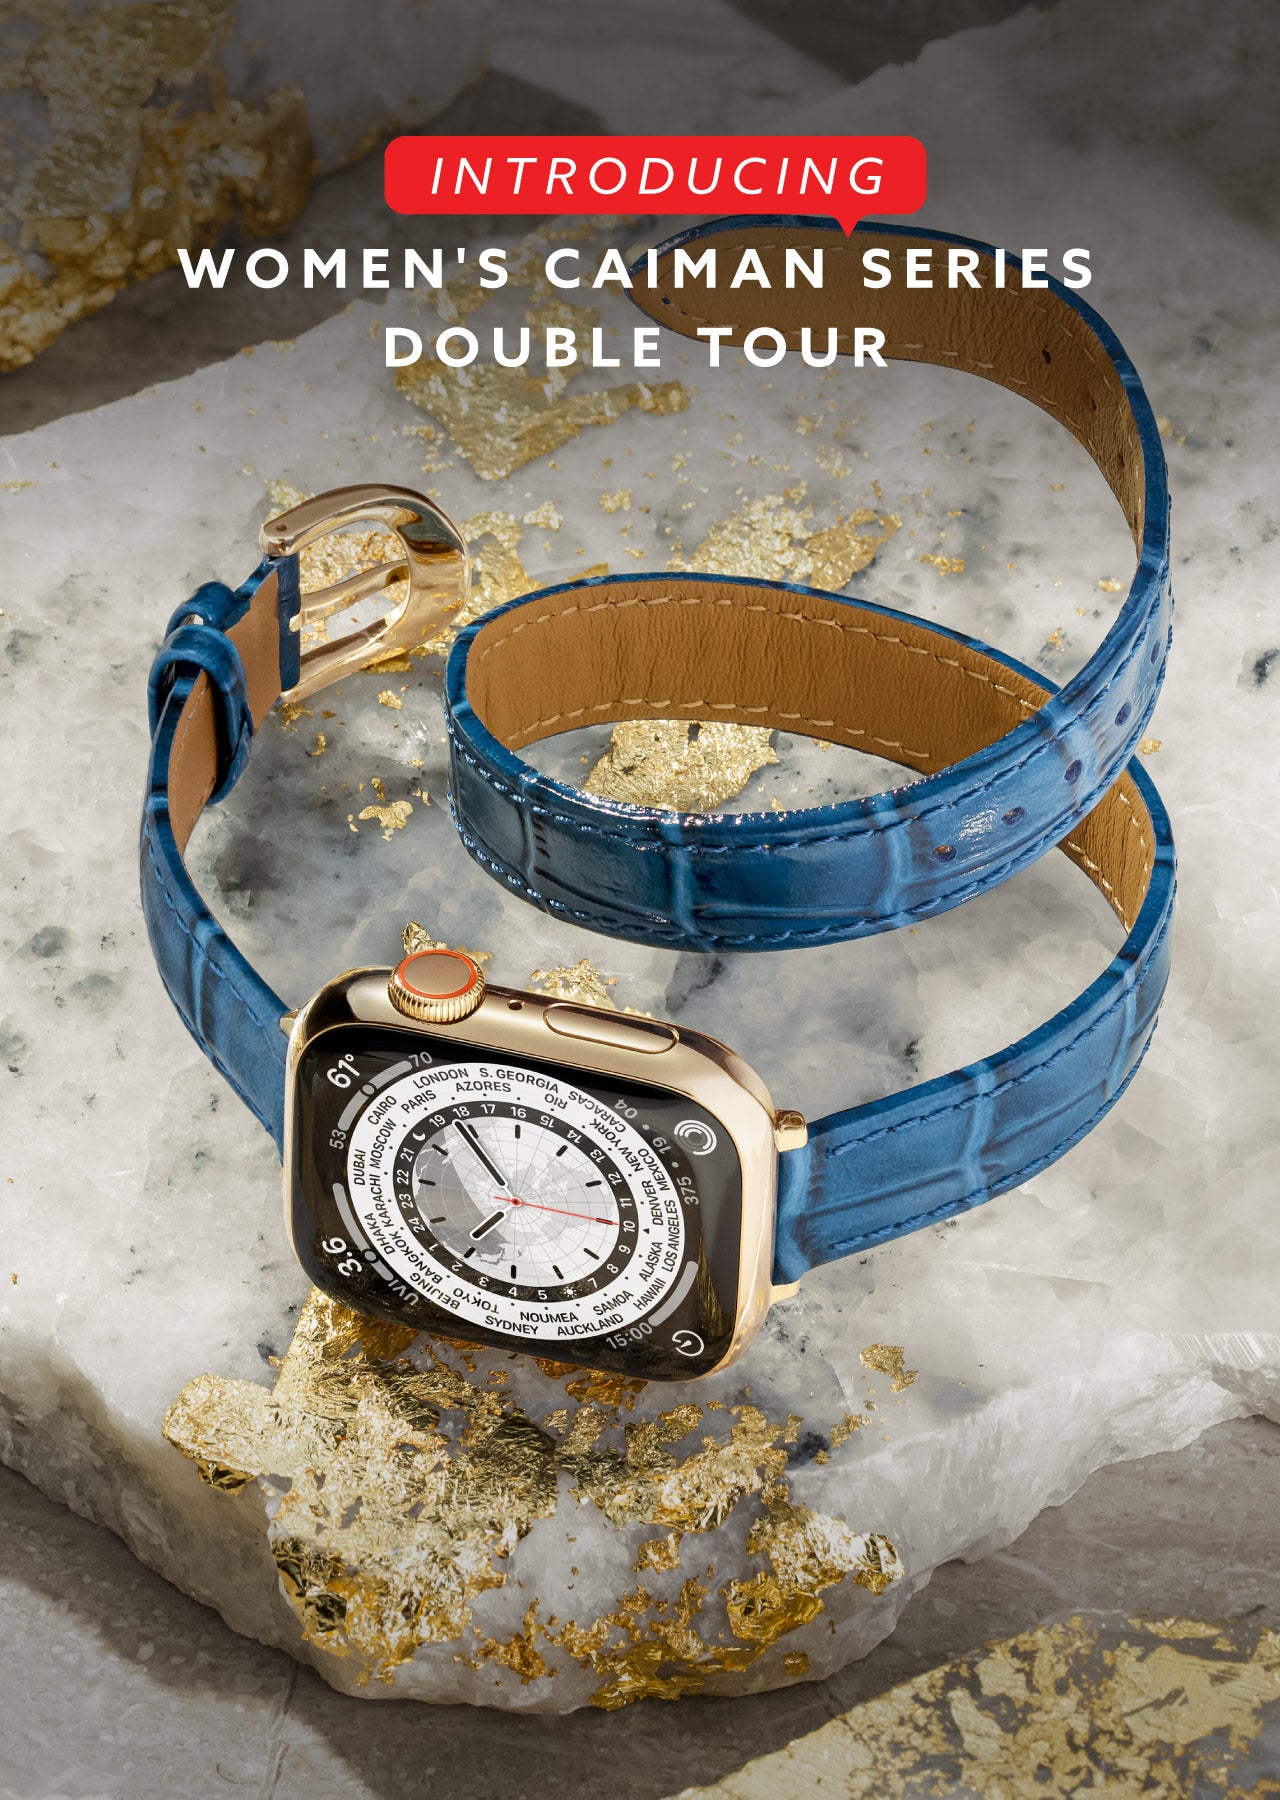 Luxury Apple Watch band – rawbangles